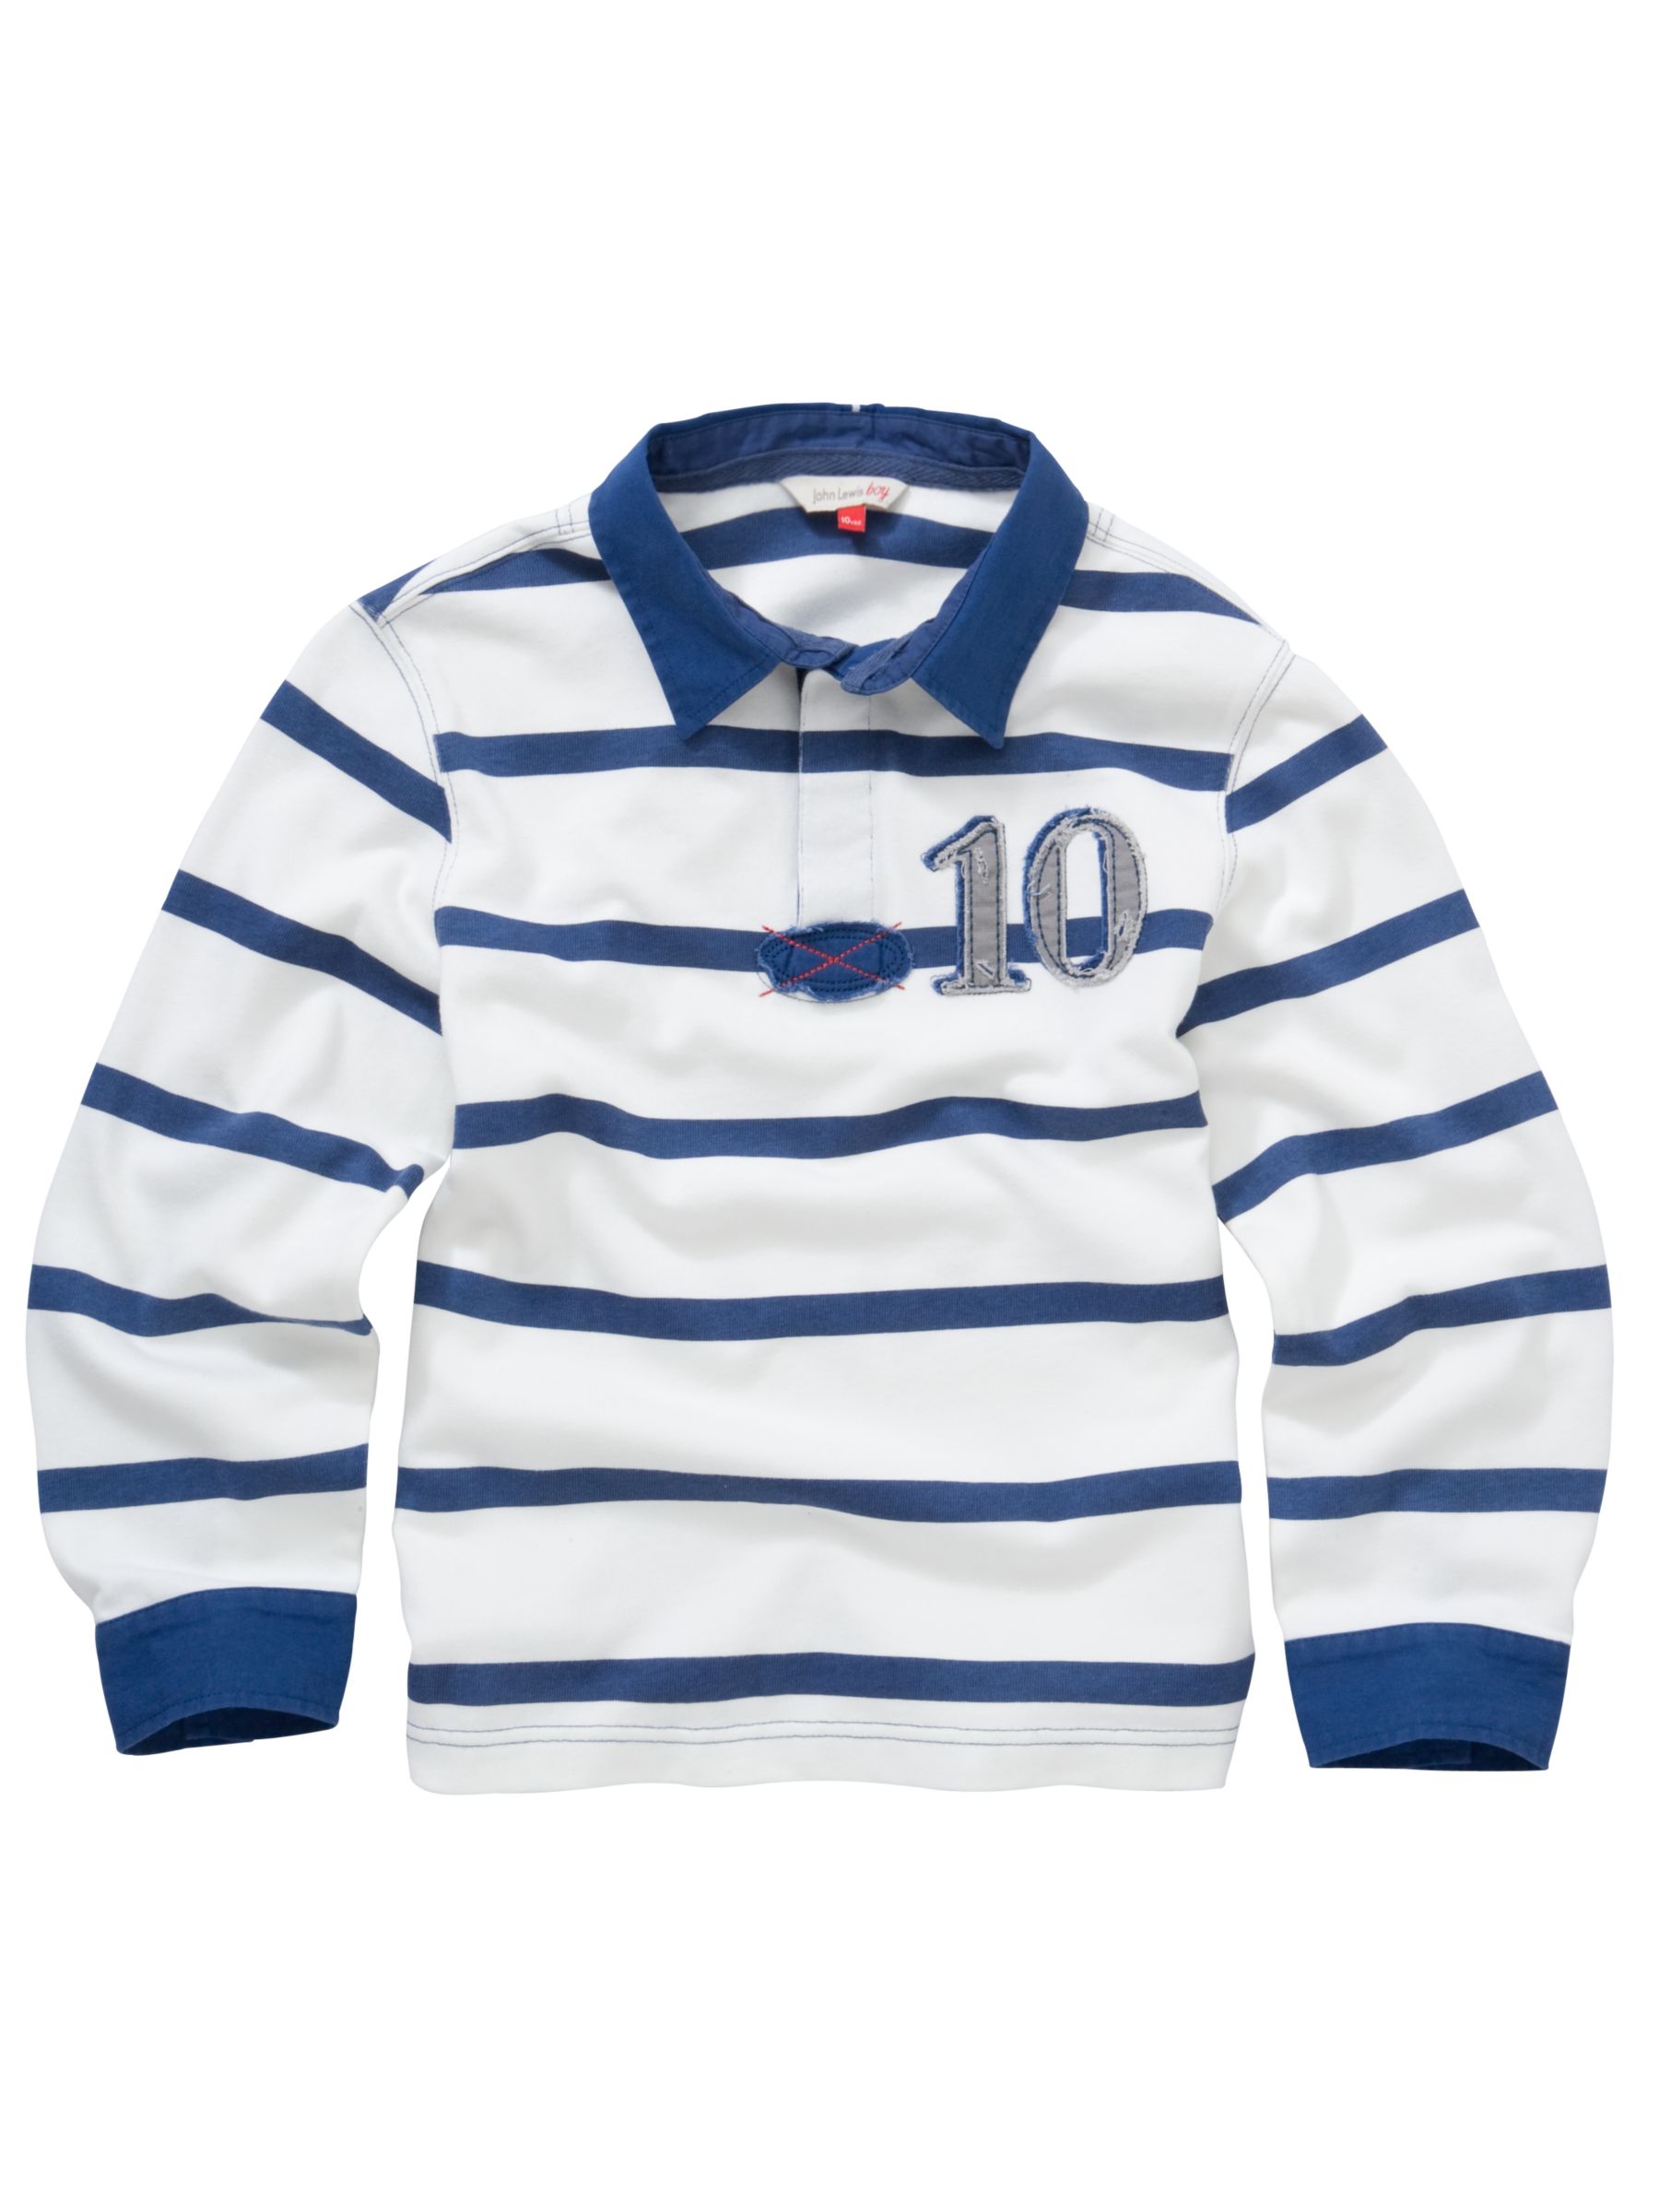 Stripe Rugby Shirt, White/navy, 2